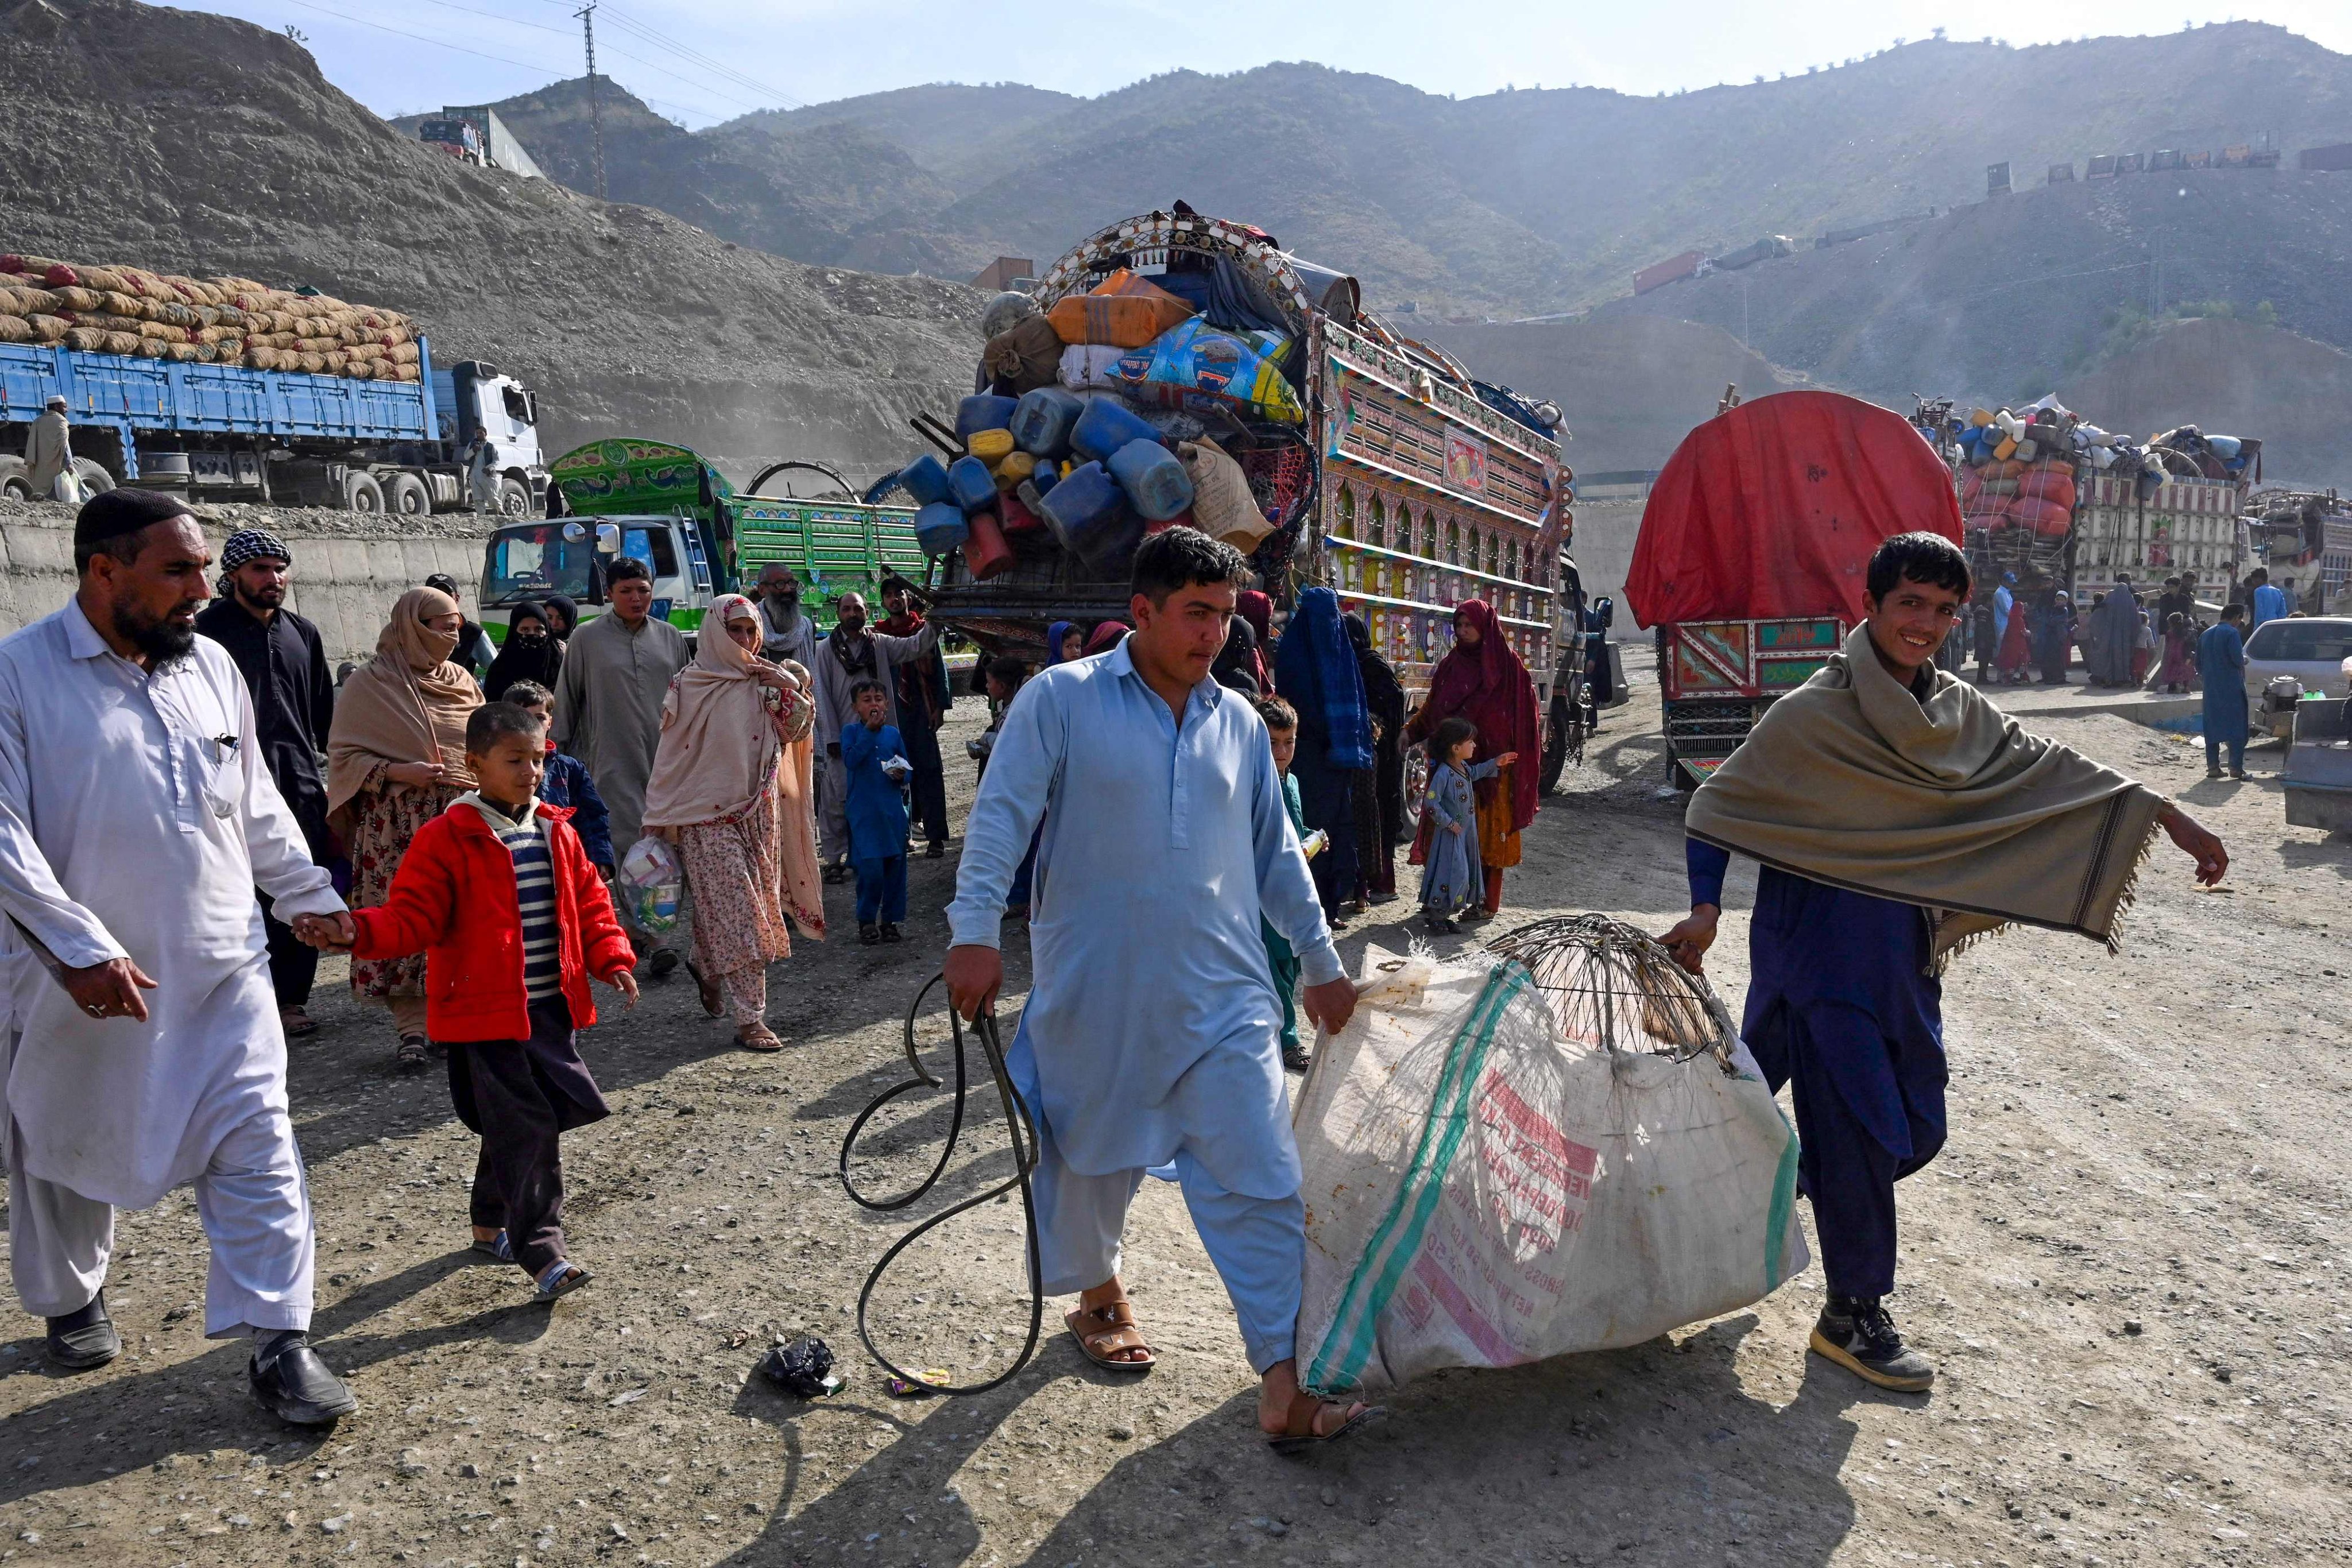 Afghan refugees arrive to cross the Pakistan-Afghanistan border in Torkham. Photo: AFP